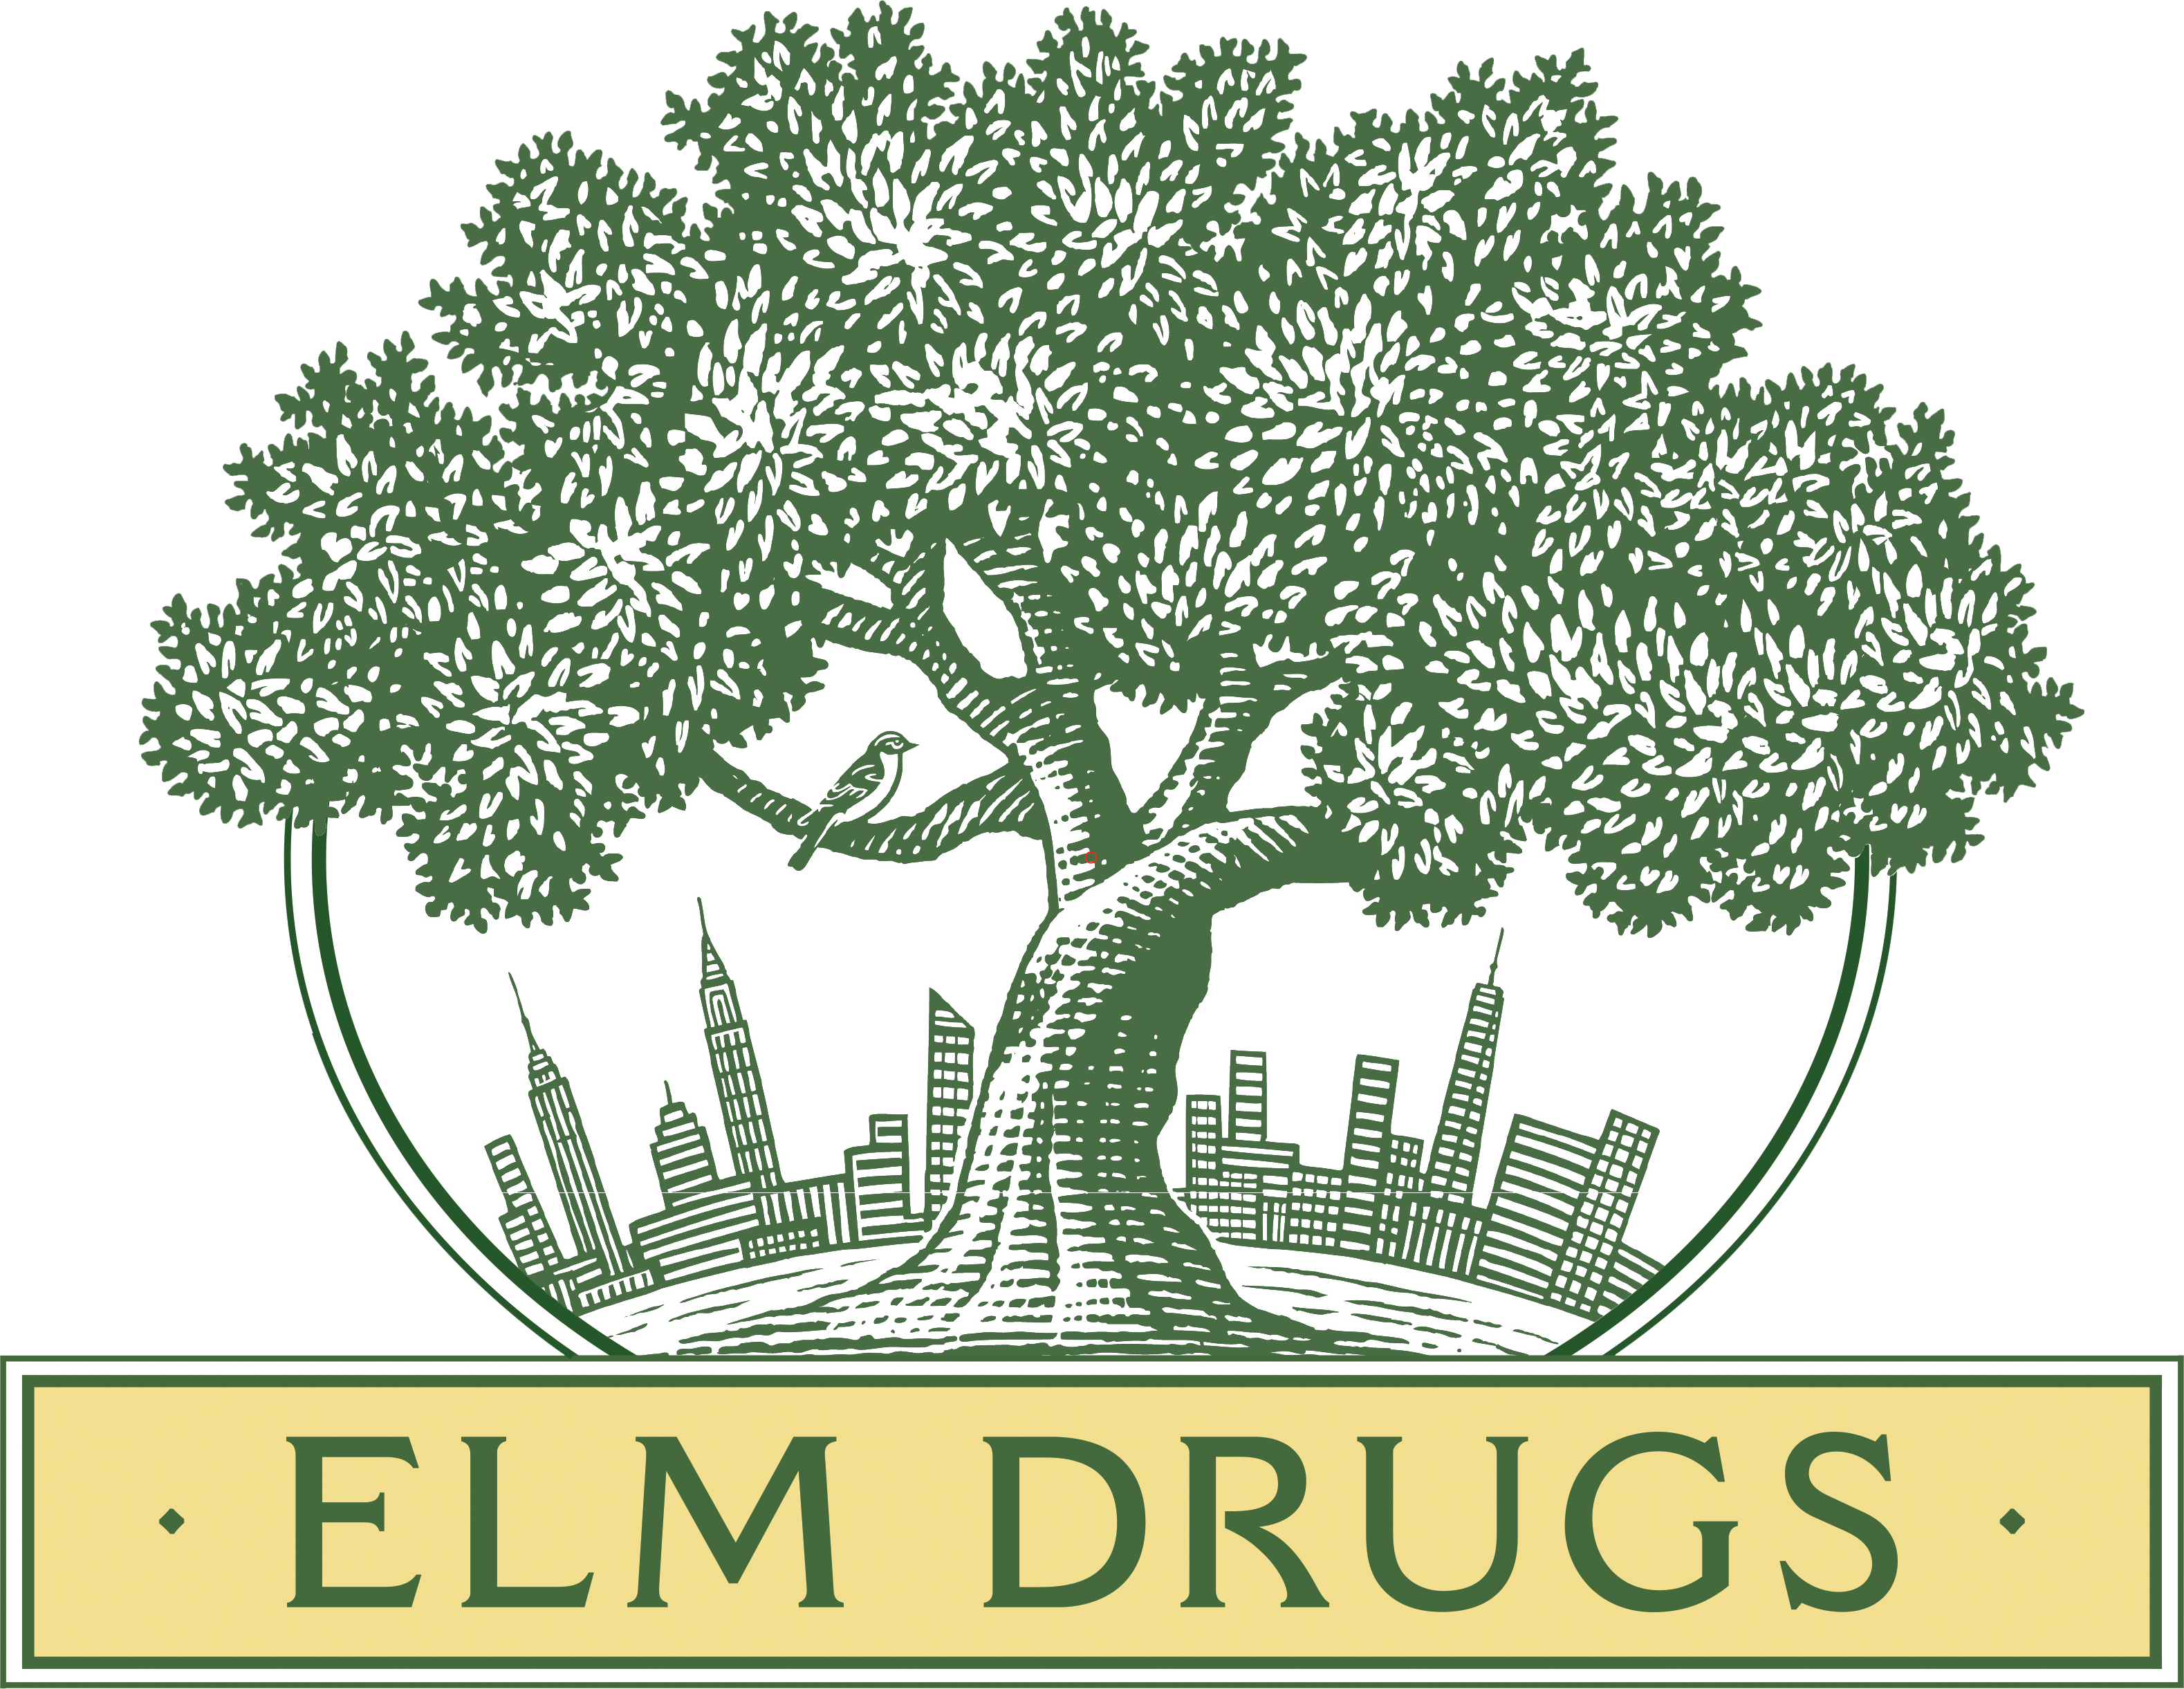 Welcome to Elm Drugs + Elm Wellness